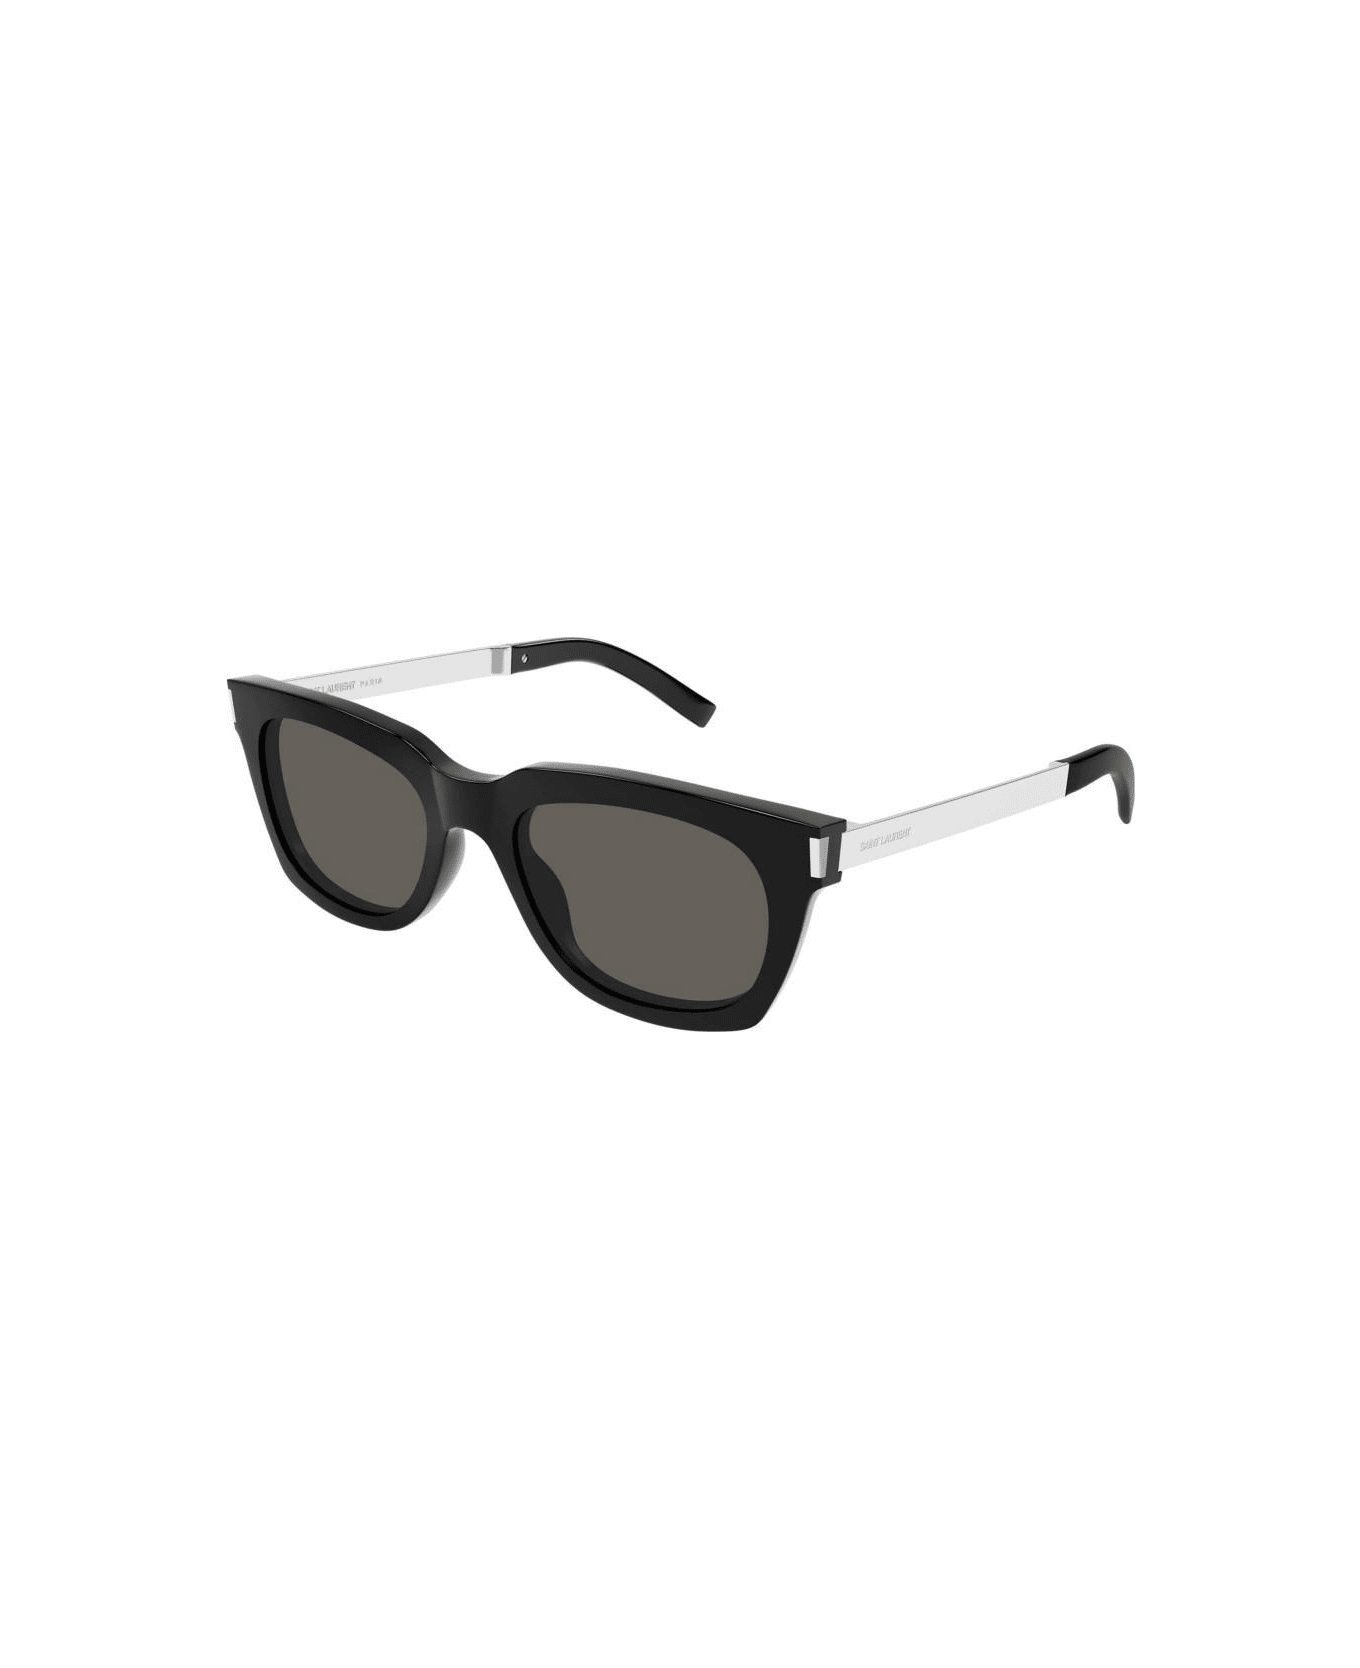 Saint Laurent Eyewear Square Frame Sunglasses Sunglasses - 001 BLACK SILVER GREY サングラス